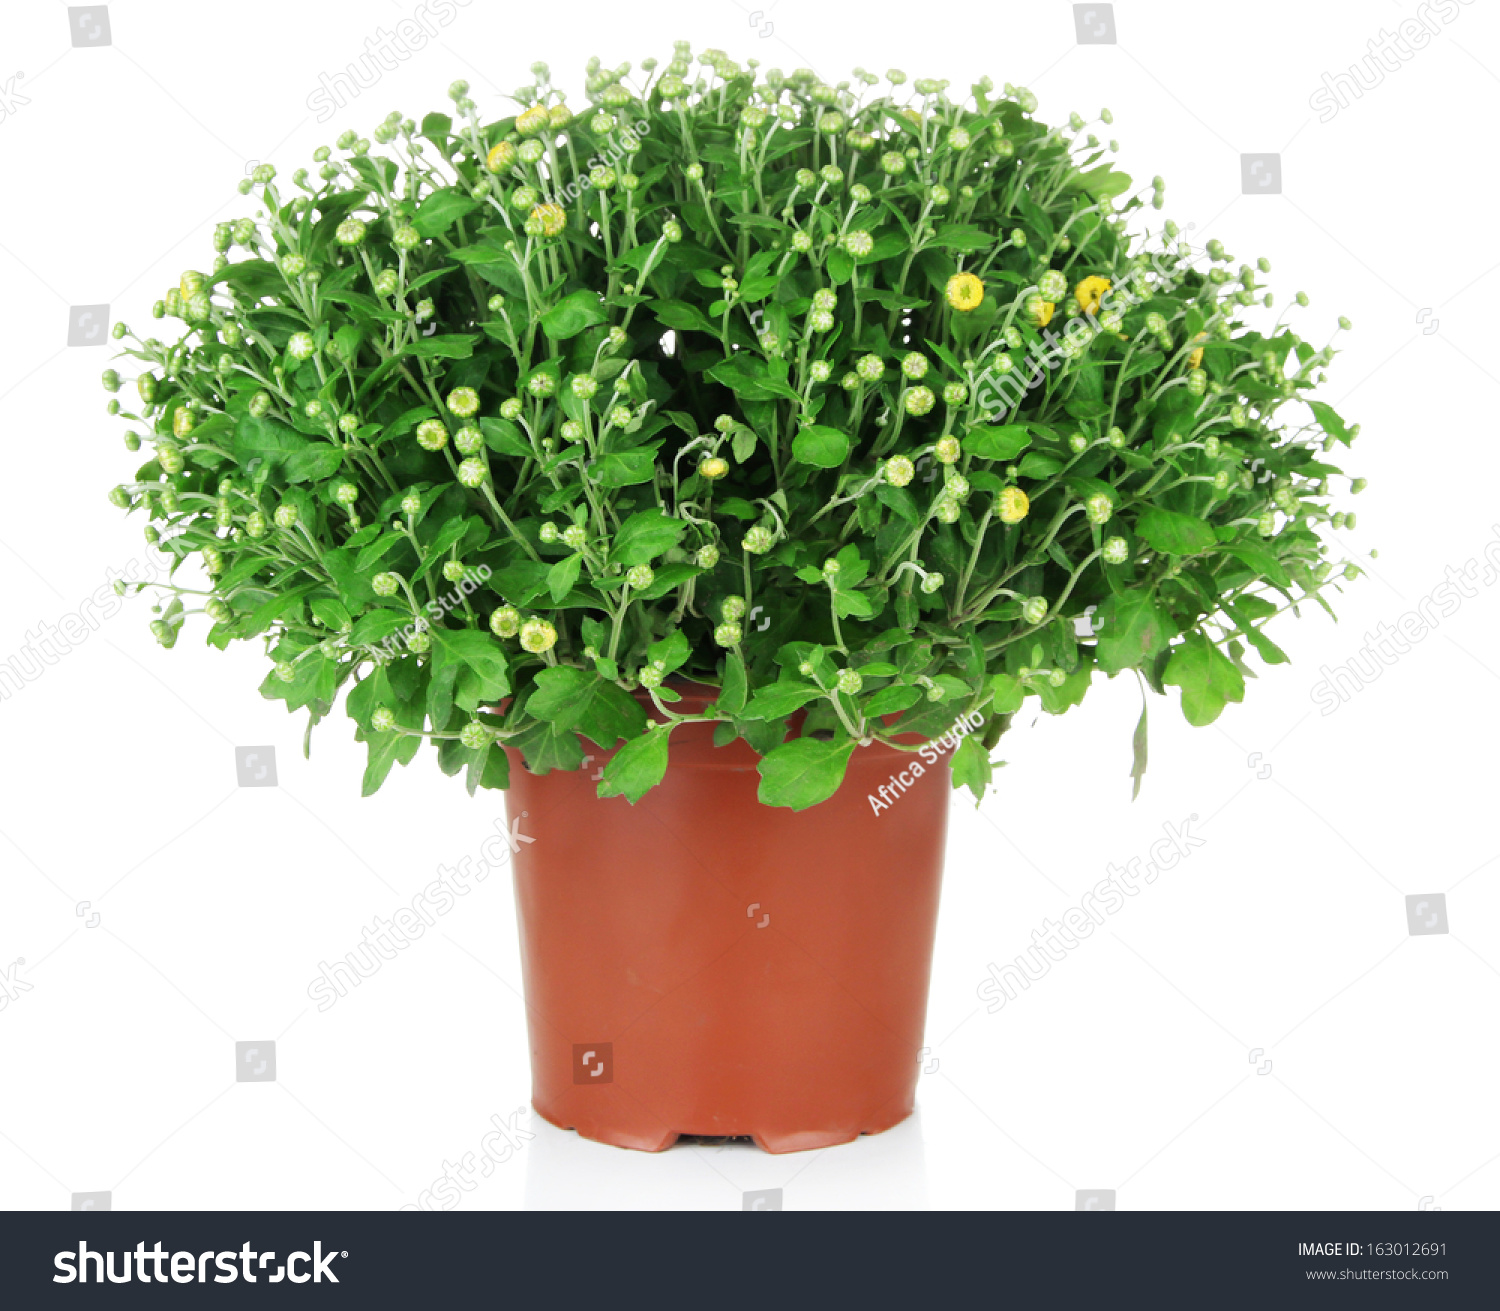 Chrysanthemum Bush In Pot Isolated On White Stock Photo 163012691 